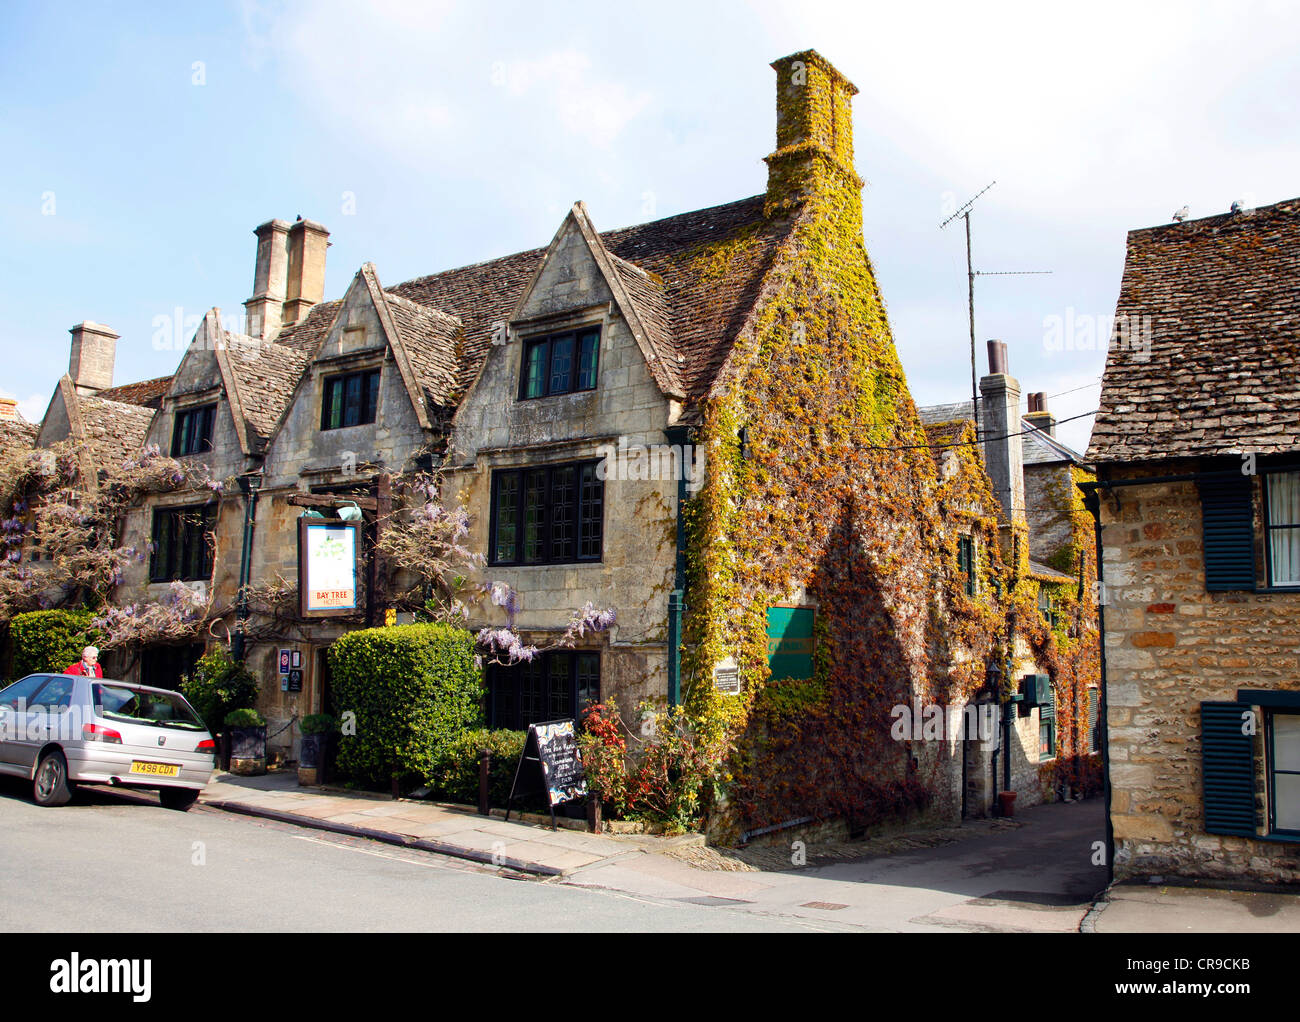 Bay Tree Hotel historique, Burford, Oxfordshire, Royaume-Uni, Europe Banque D'Images